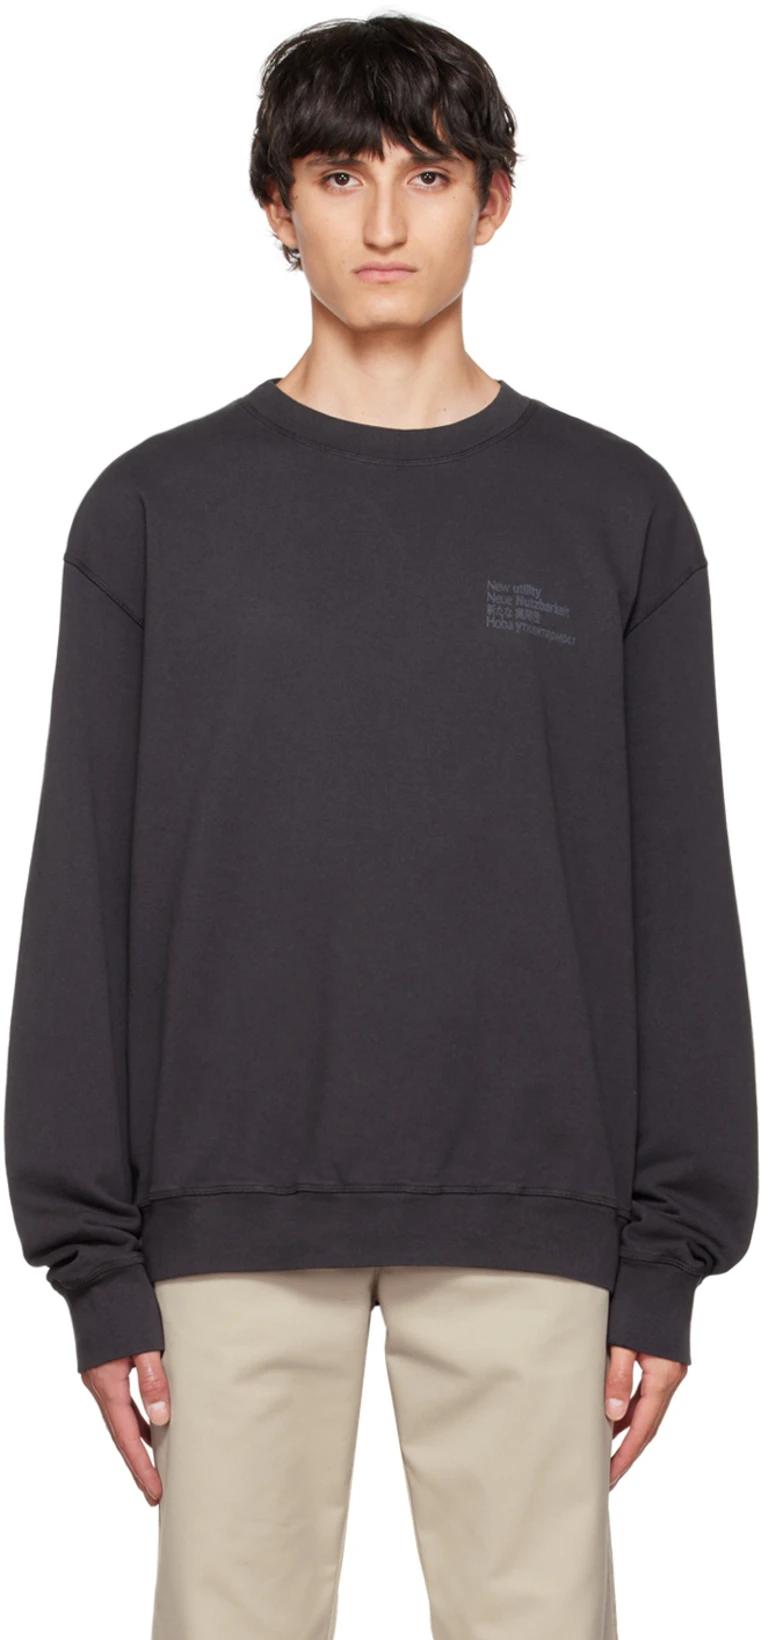 Gray Overlock Sweatshirt by AFFXWRKS